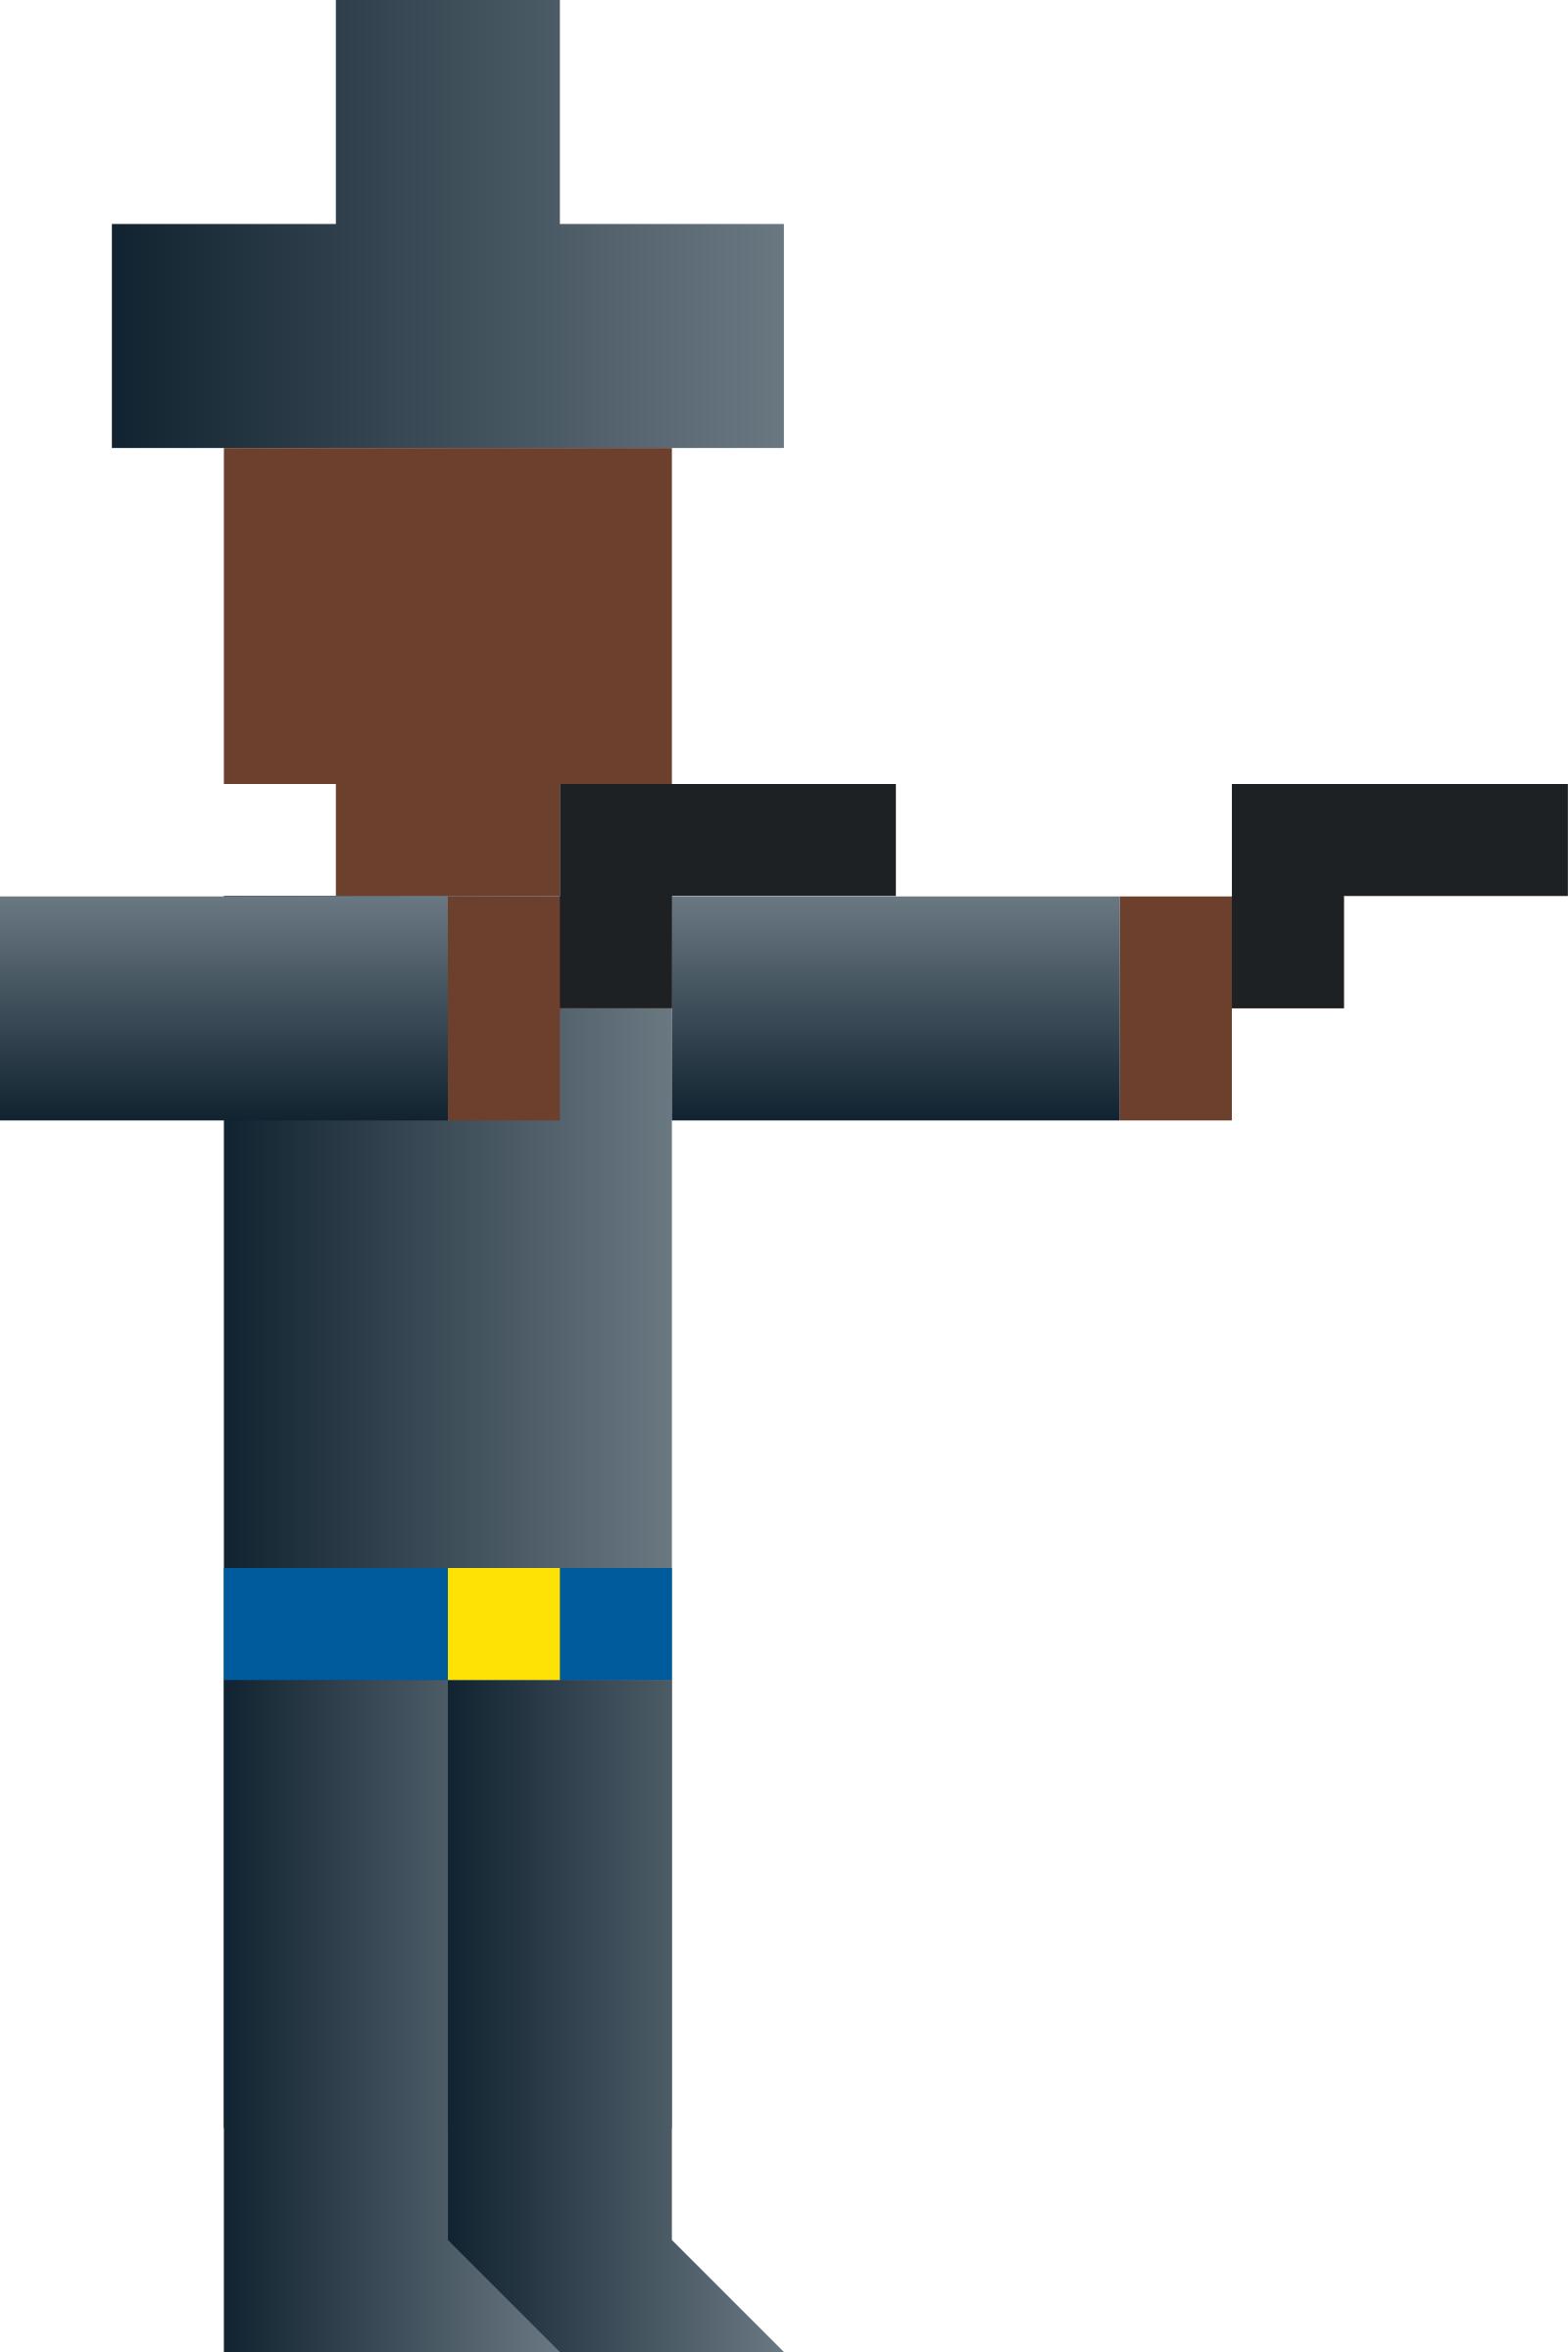 Cowboy Dual-Wielding Guns (Abstract Vector Pixel Art) PNG icons